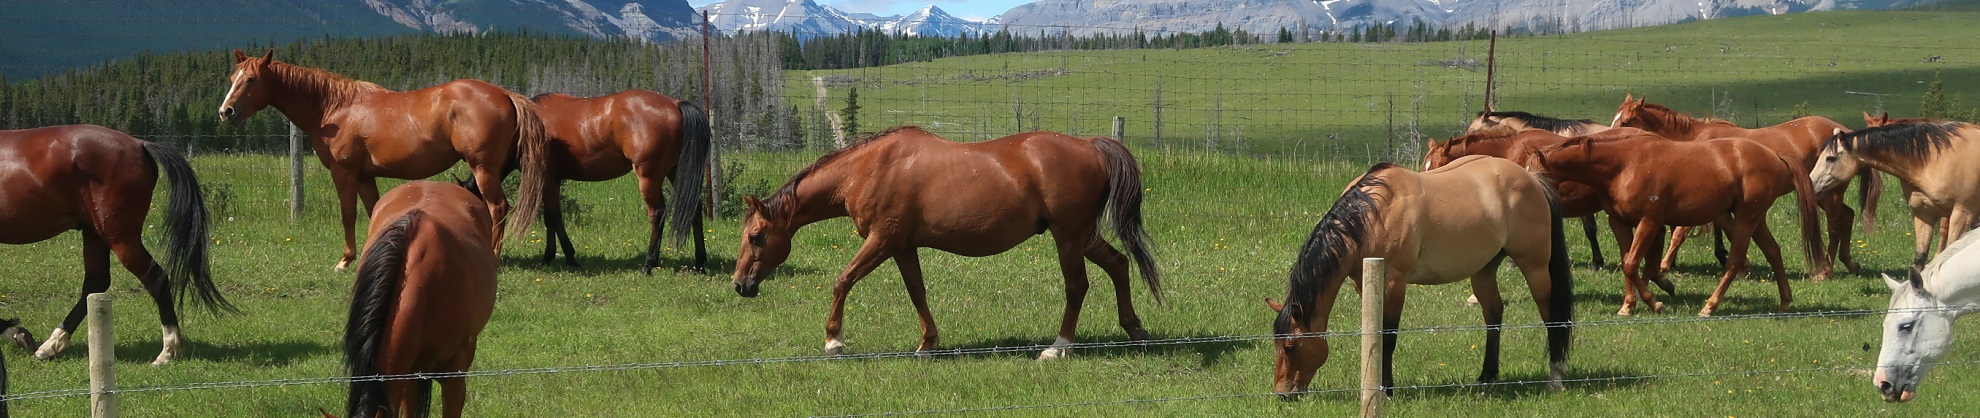 horses grazing on field at Ya Ha Tinda Ranch 